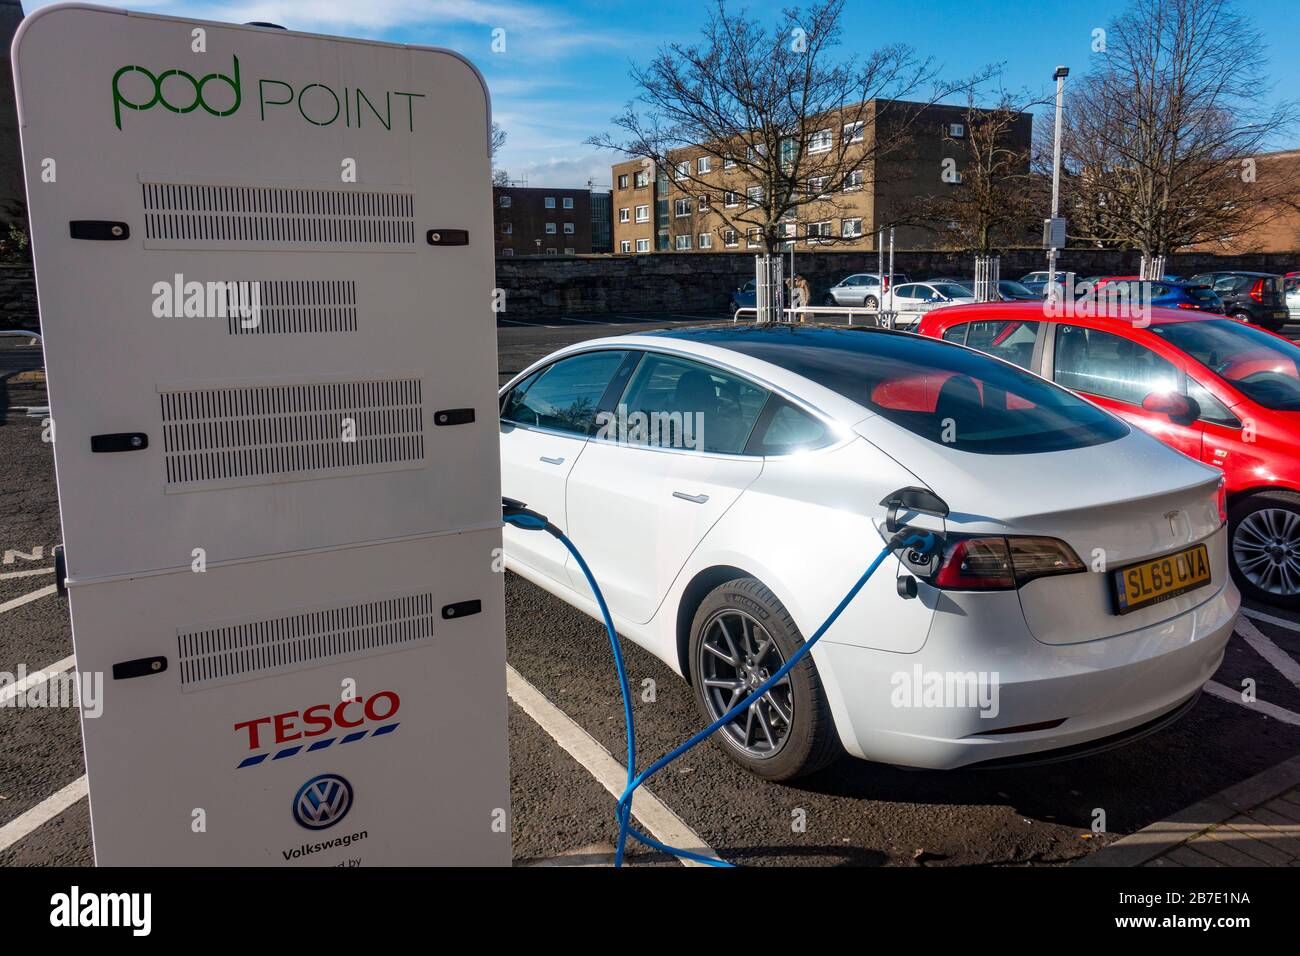 Tesla electric car charging at free Pod Point charging station in Tesco supermarket, UK, United Kingdom Stock Photo